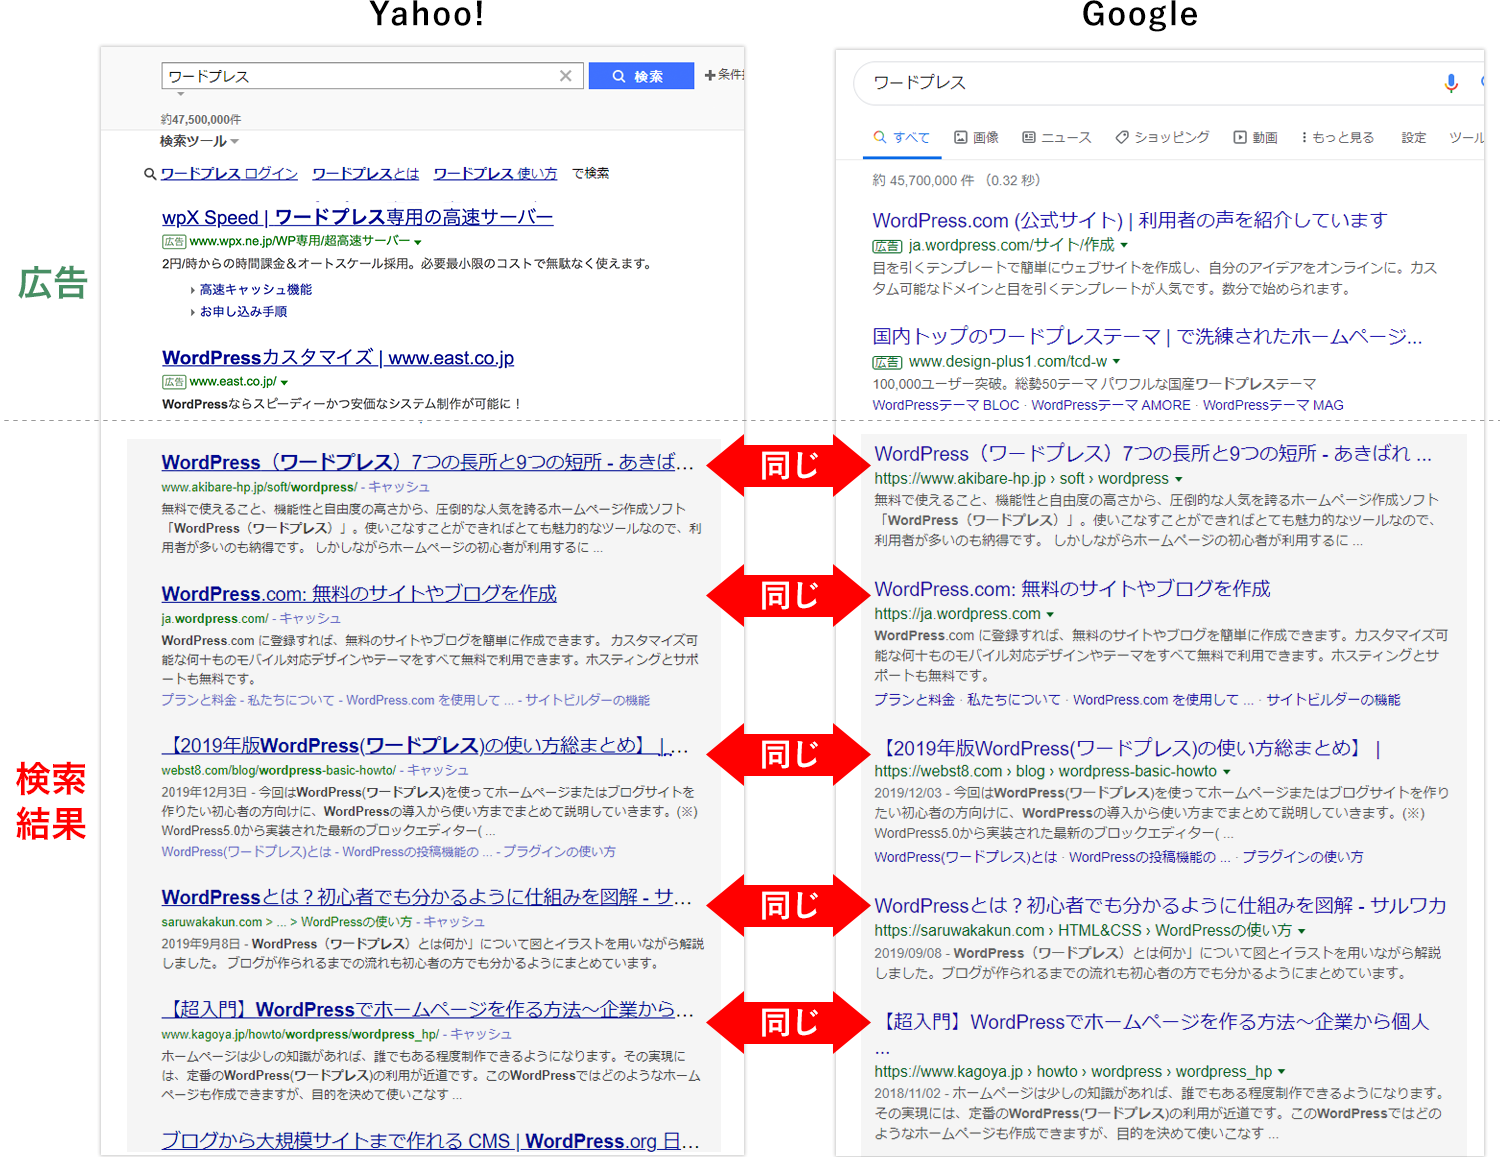 Yahoo!とGoogleは同じ検索結果